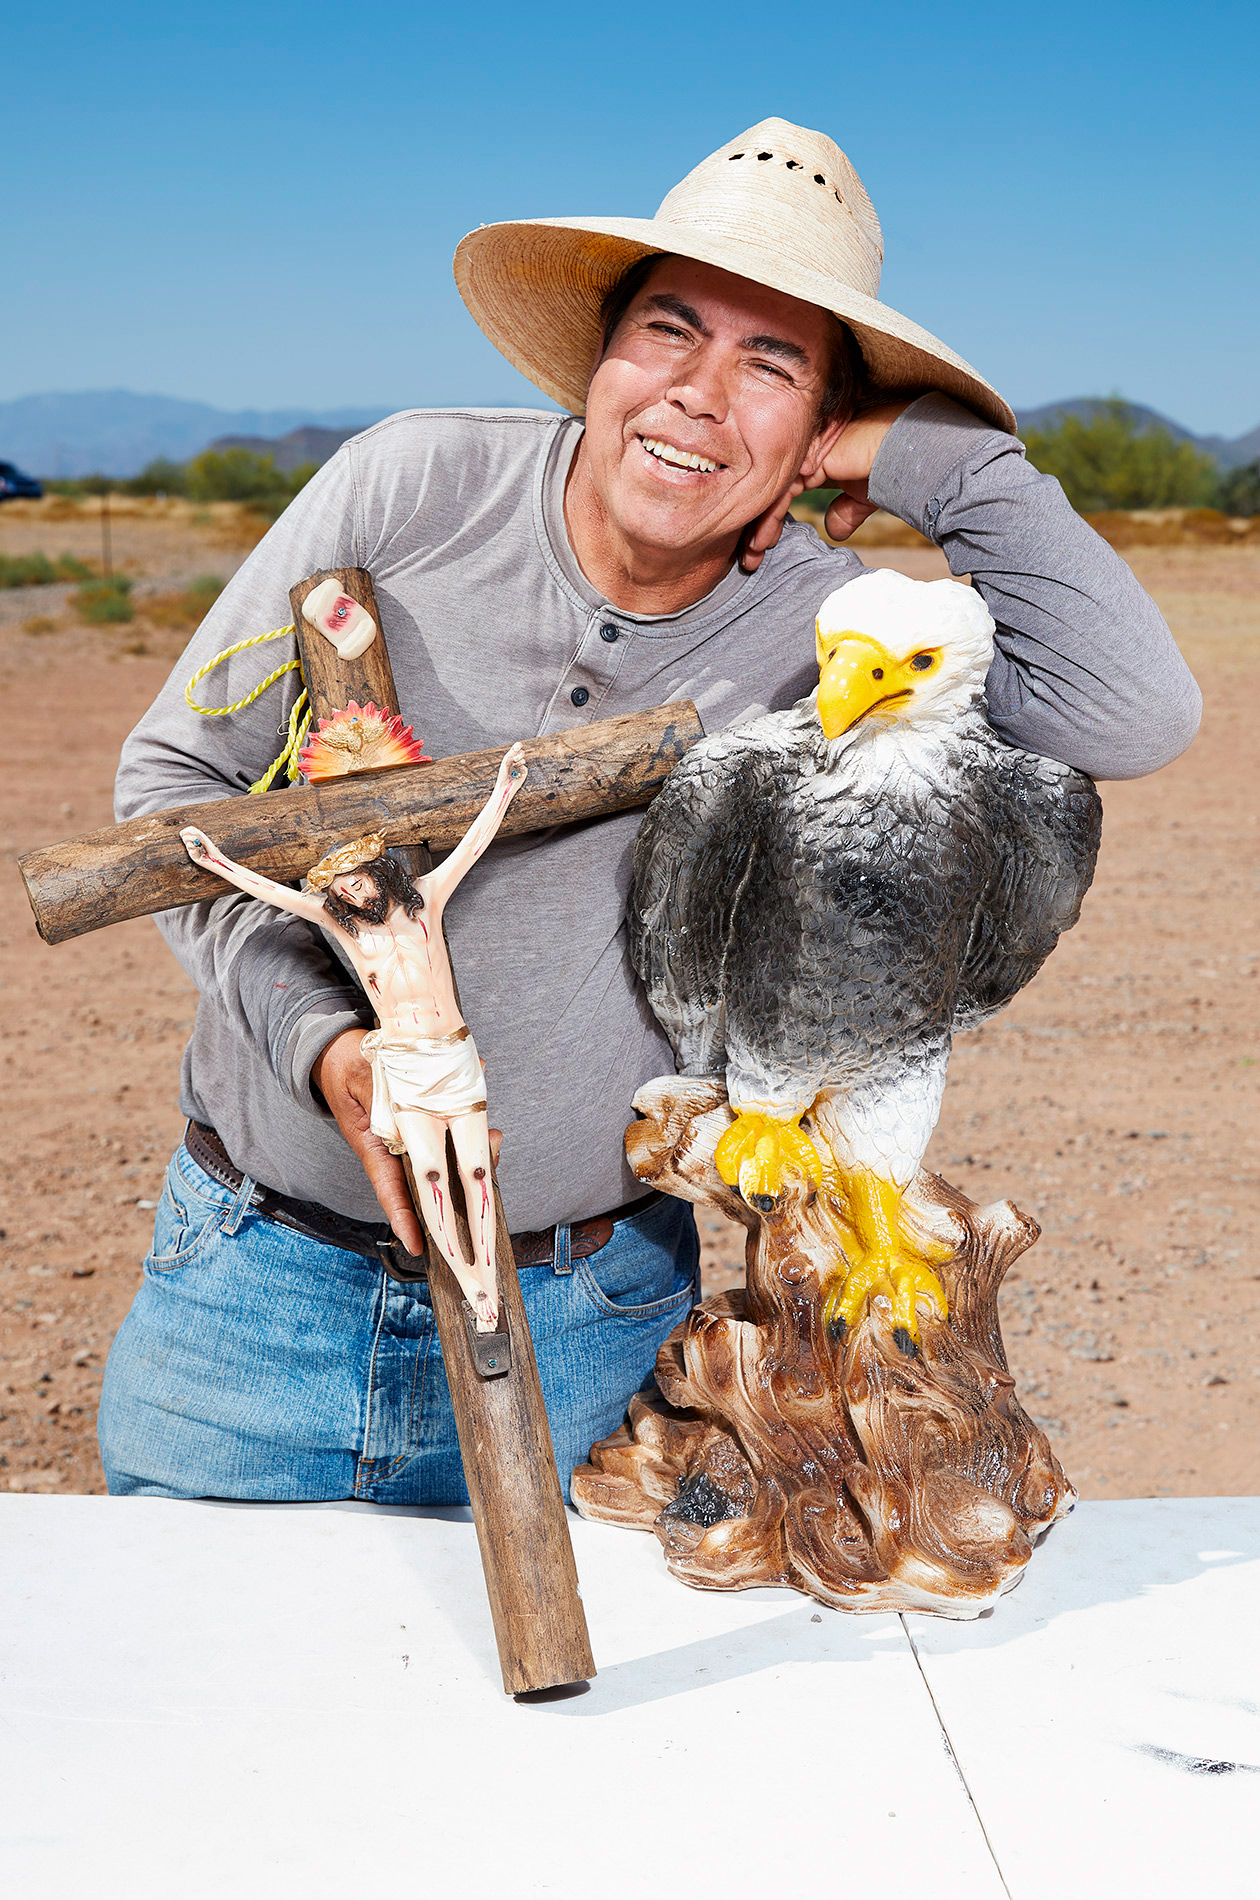 Jesus and Eagle  - Steve Craft Photography, Phoenix, Arizona based Commercial, Aviation & Editorial Photographer